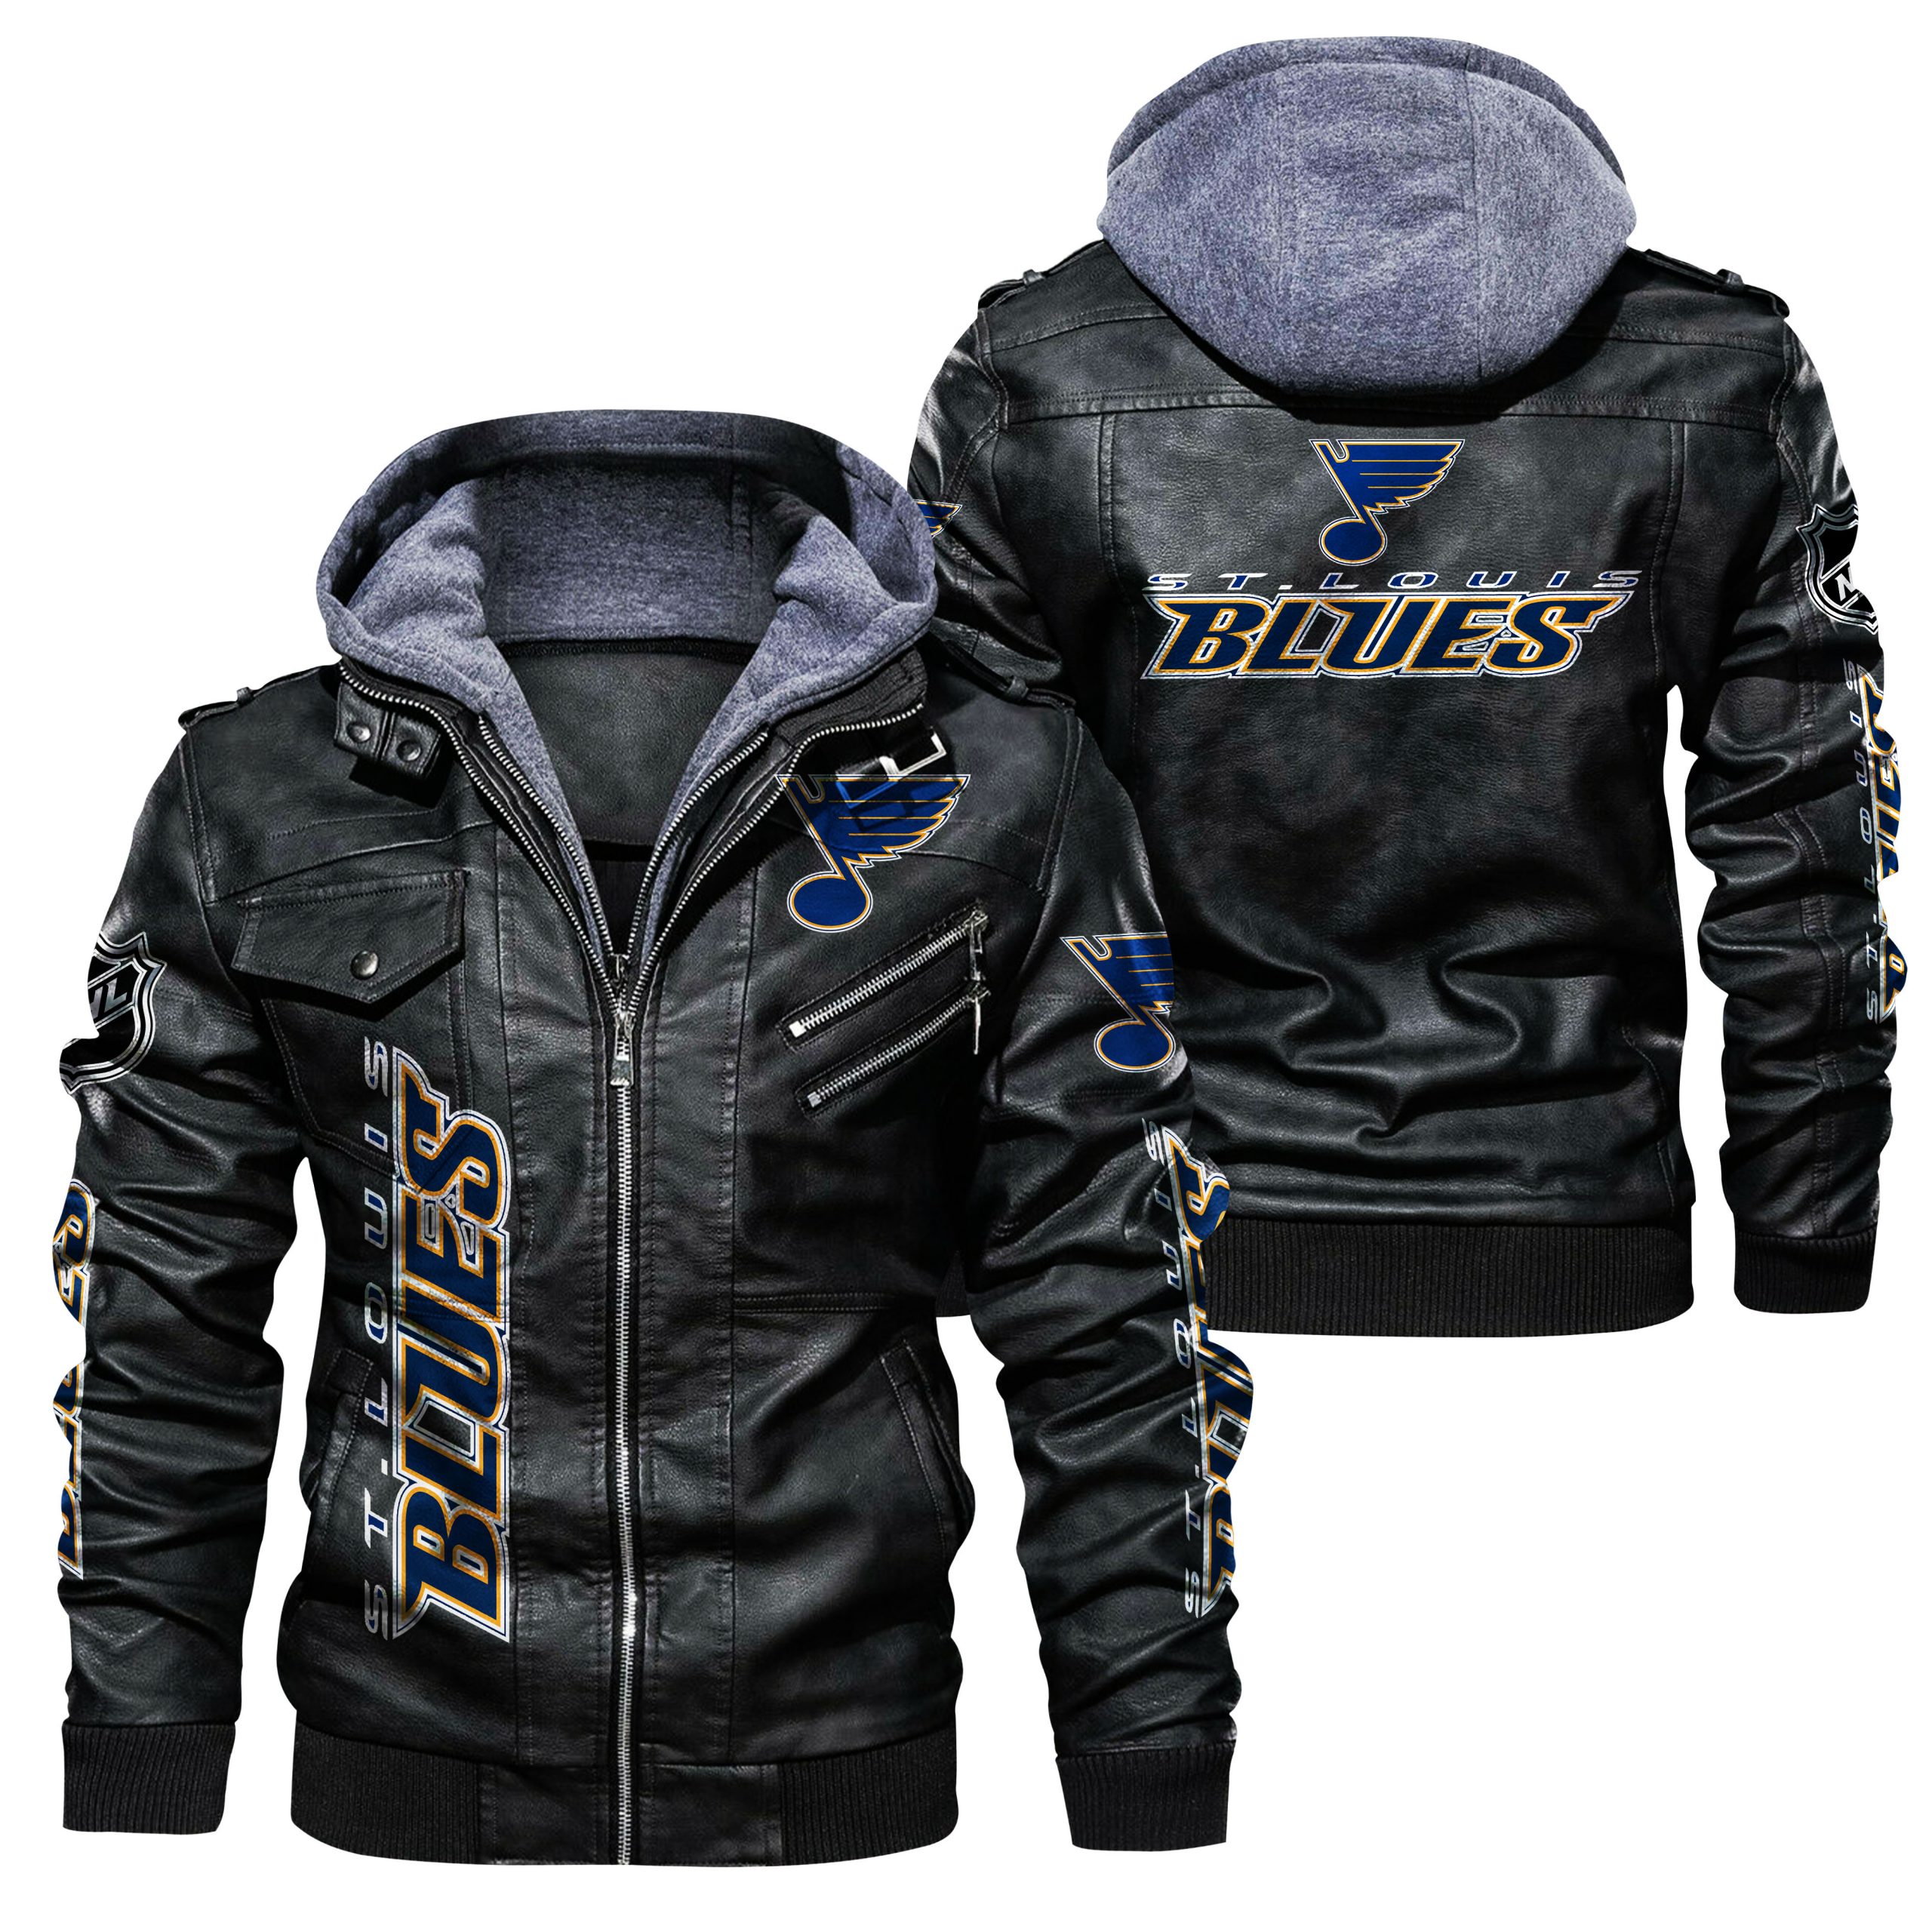 St. Louis Blues Leather Jacket For Sport Fans